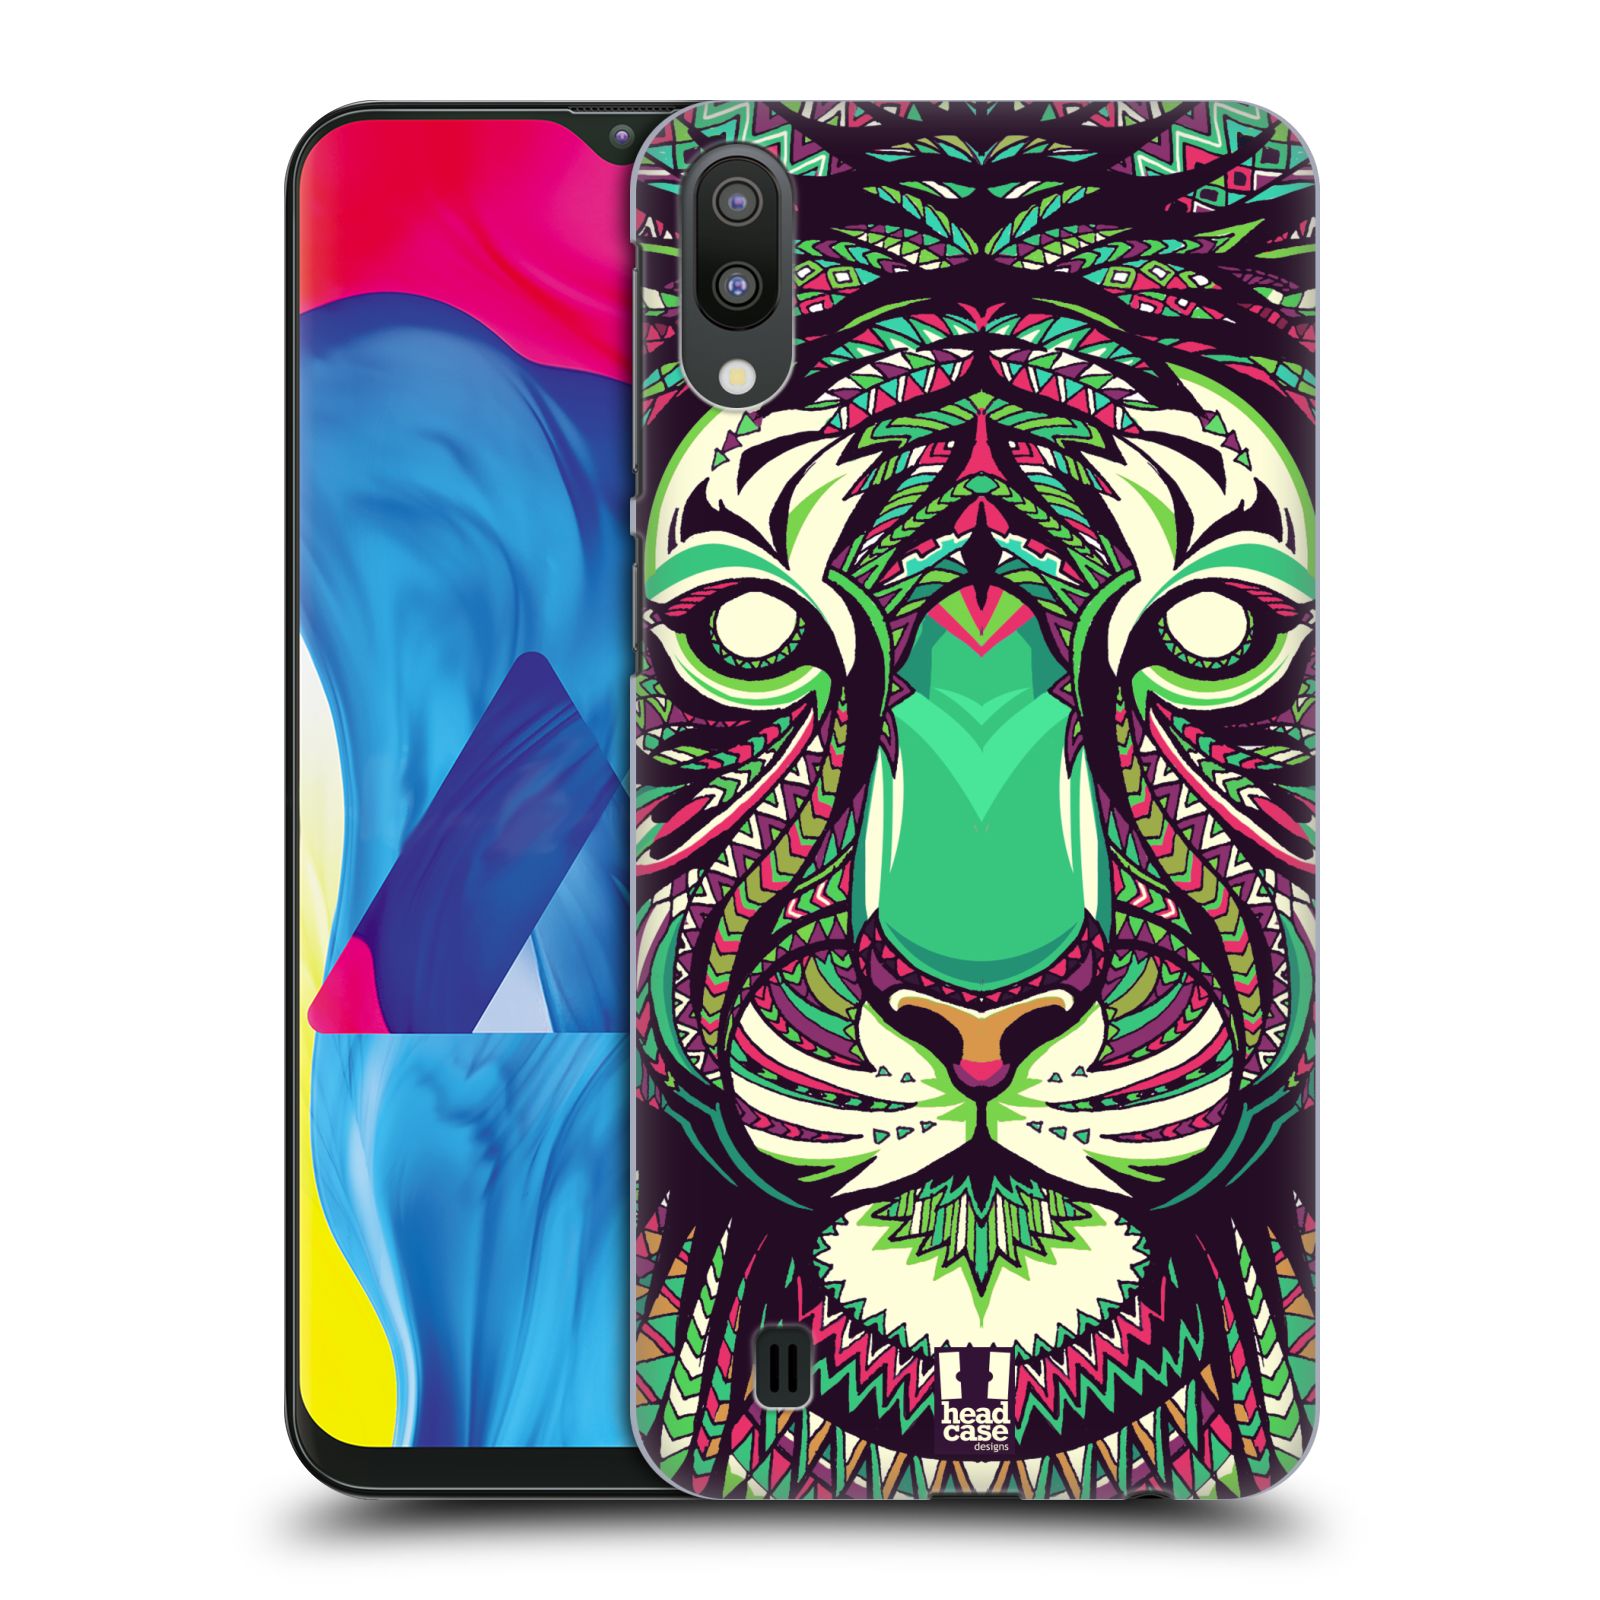 Plastový obal HEAD CASE na mobil Samsung Galaxy M10 vzor Aztécký motiv zvíře 2 tygr